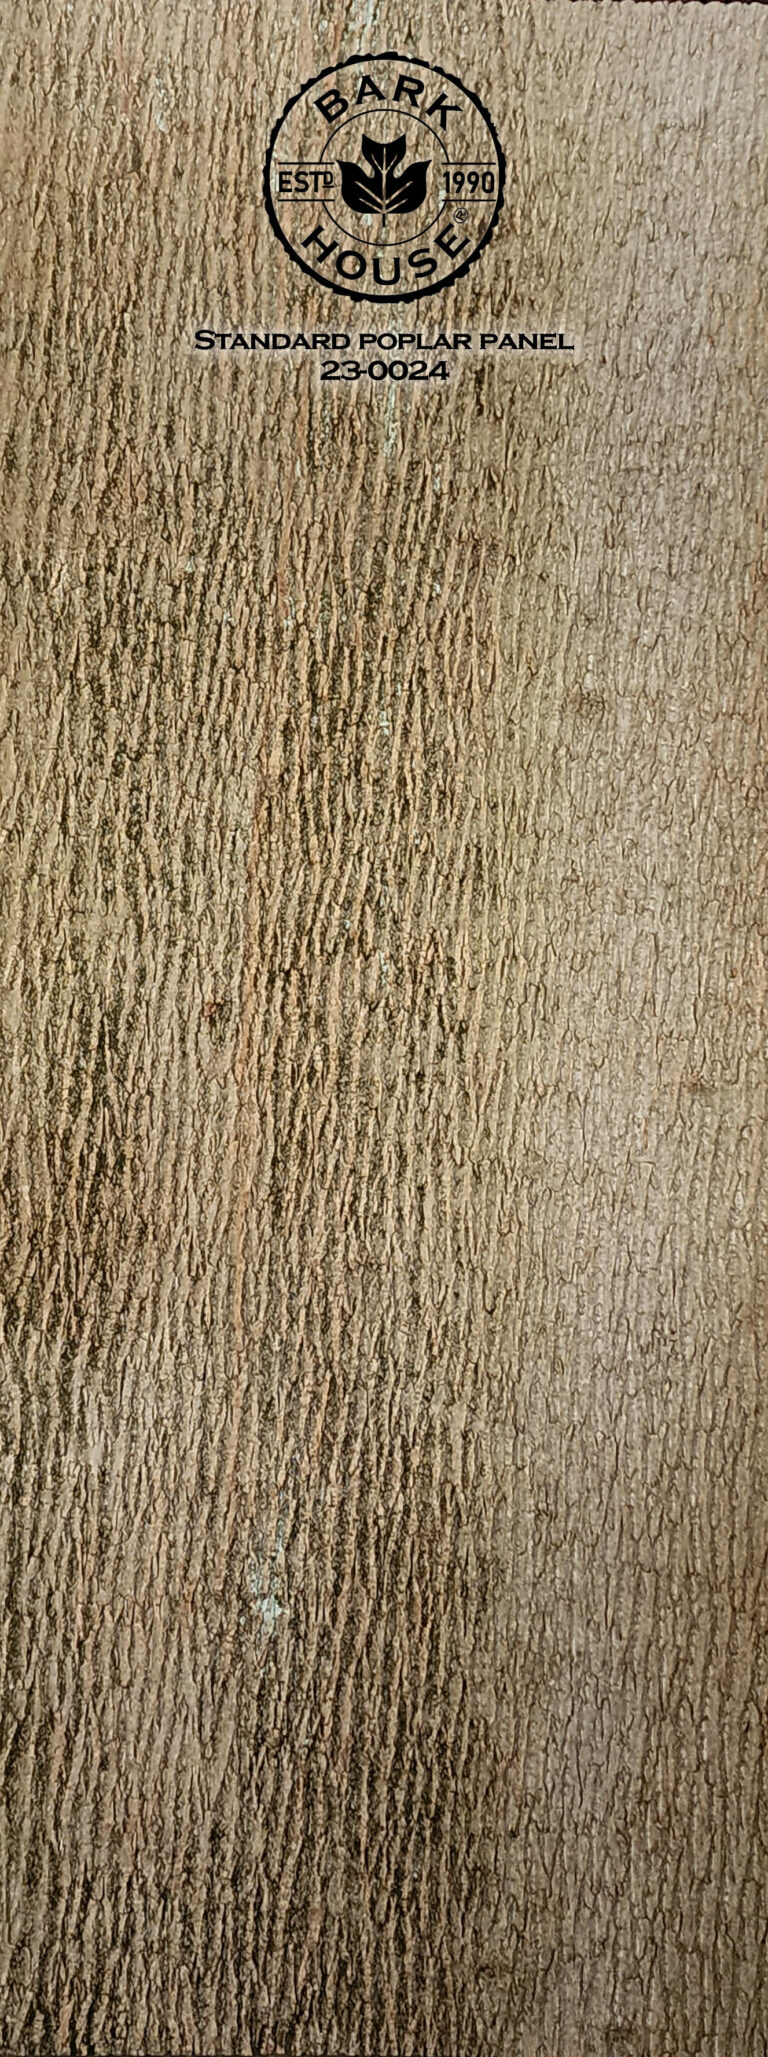 Bark House poplar bark panel SKU POPP-STD-23-0024